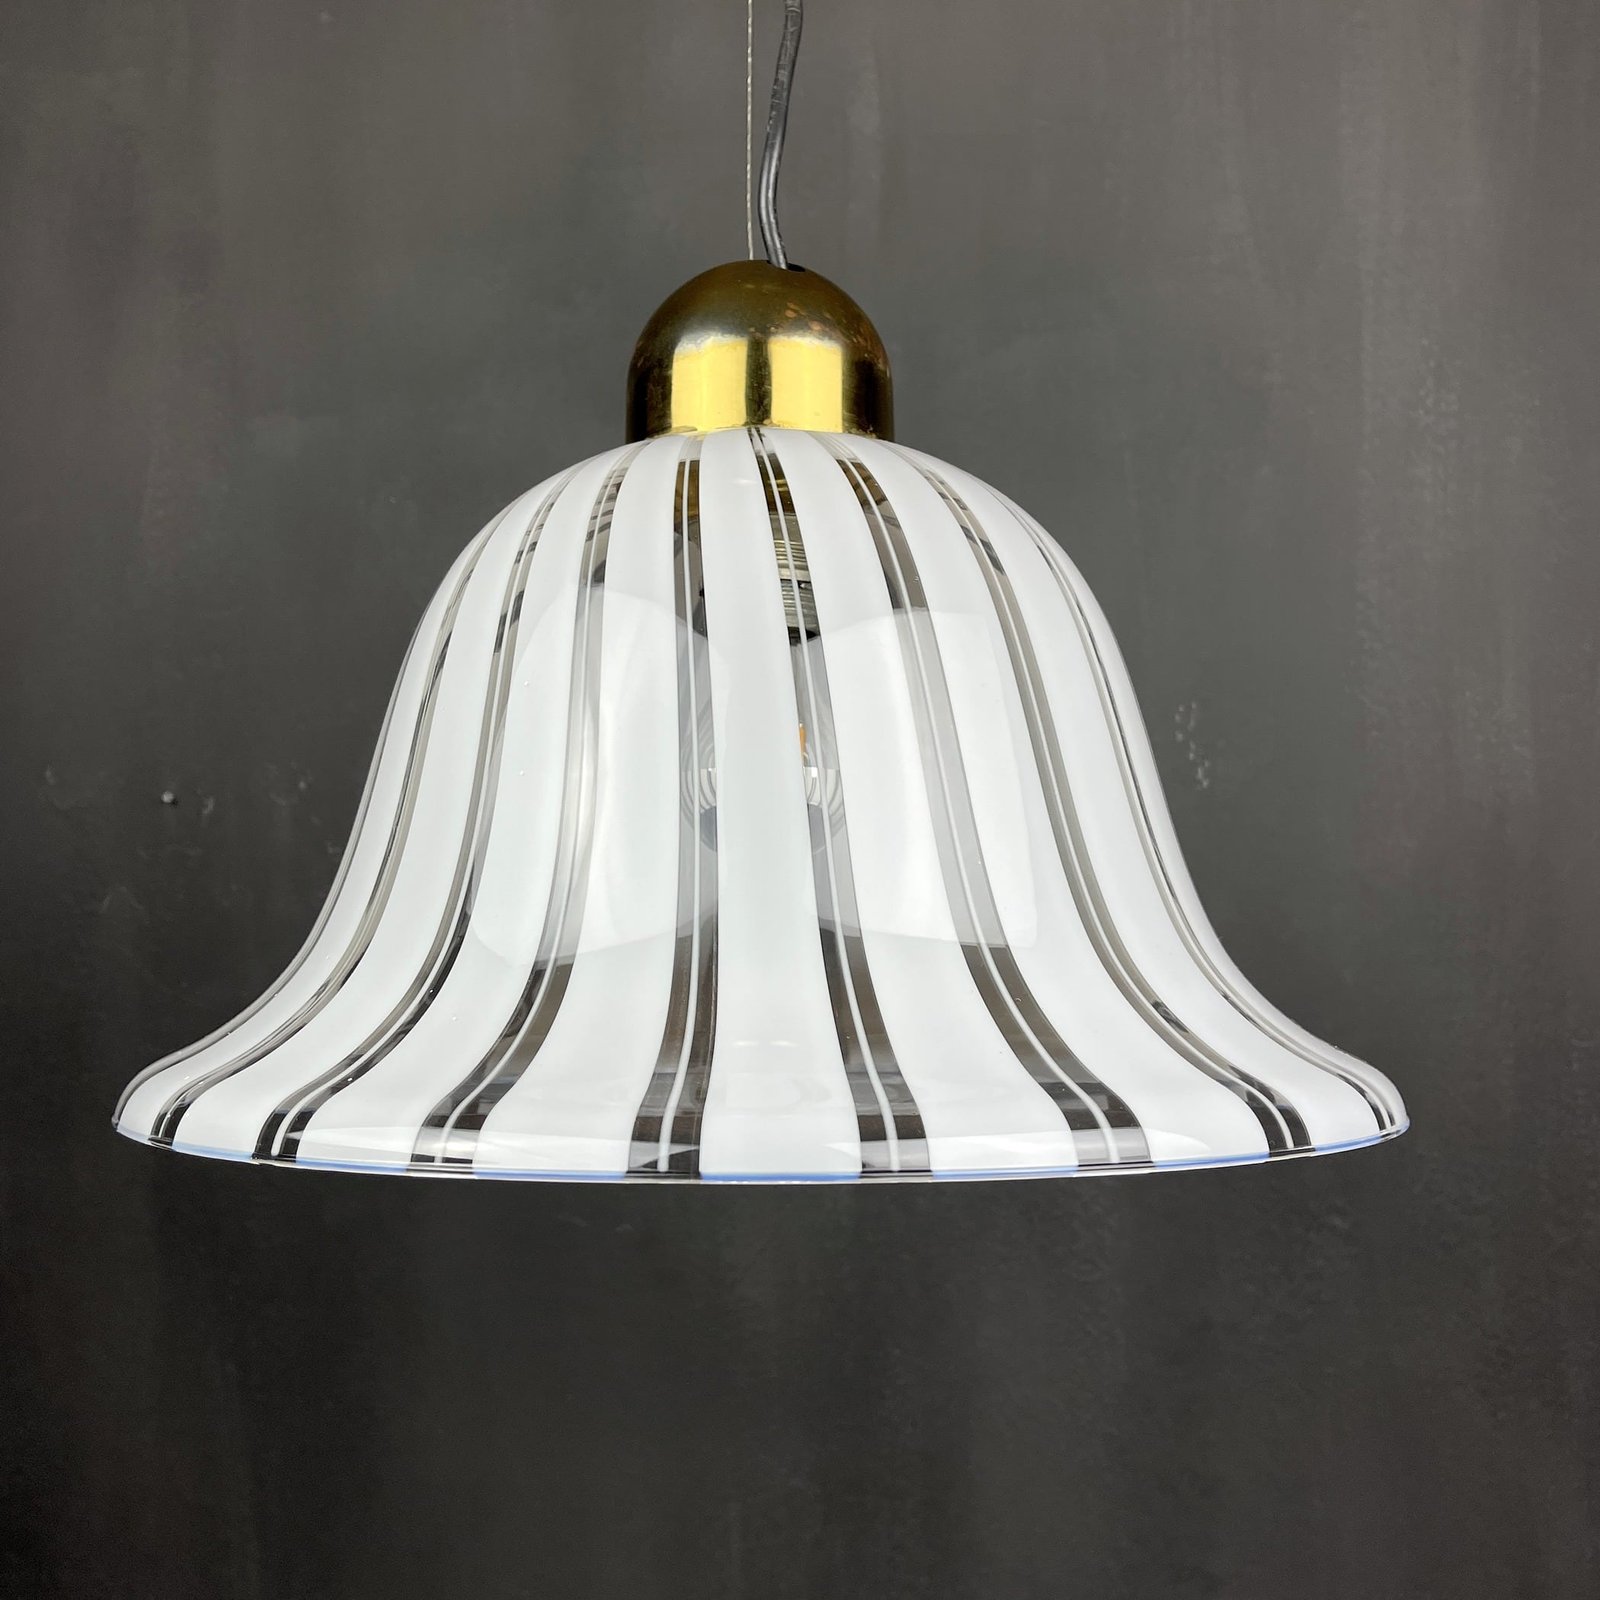 Vintage murano white pendant lamp Italy 1970s Italian mid-century lighting Retro home decor